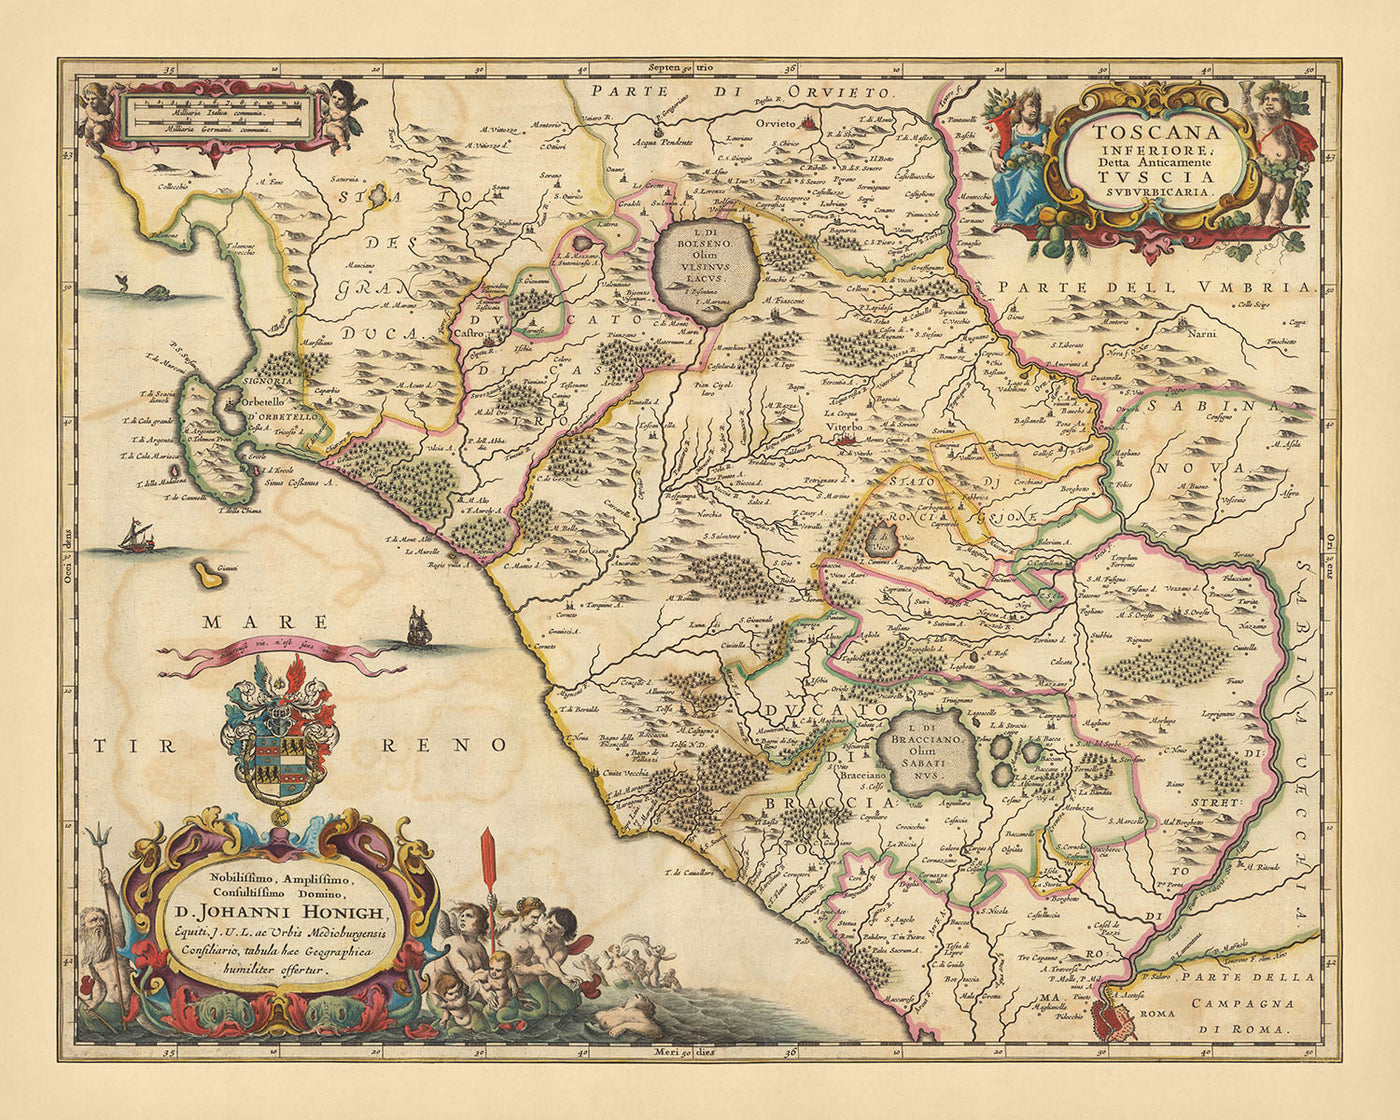 Ancienne carte de la Basse Toscane par Visscher, 1690 : Viterbo, Rome, Orvieto, Civitavecchia, Parco Bracciano Martignano